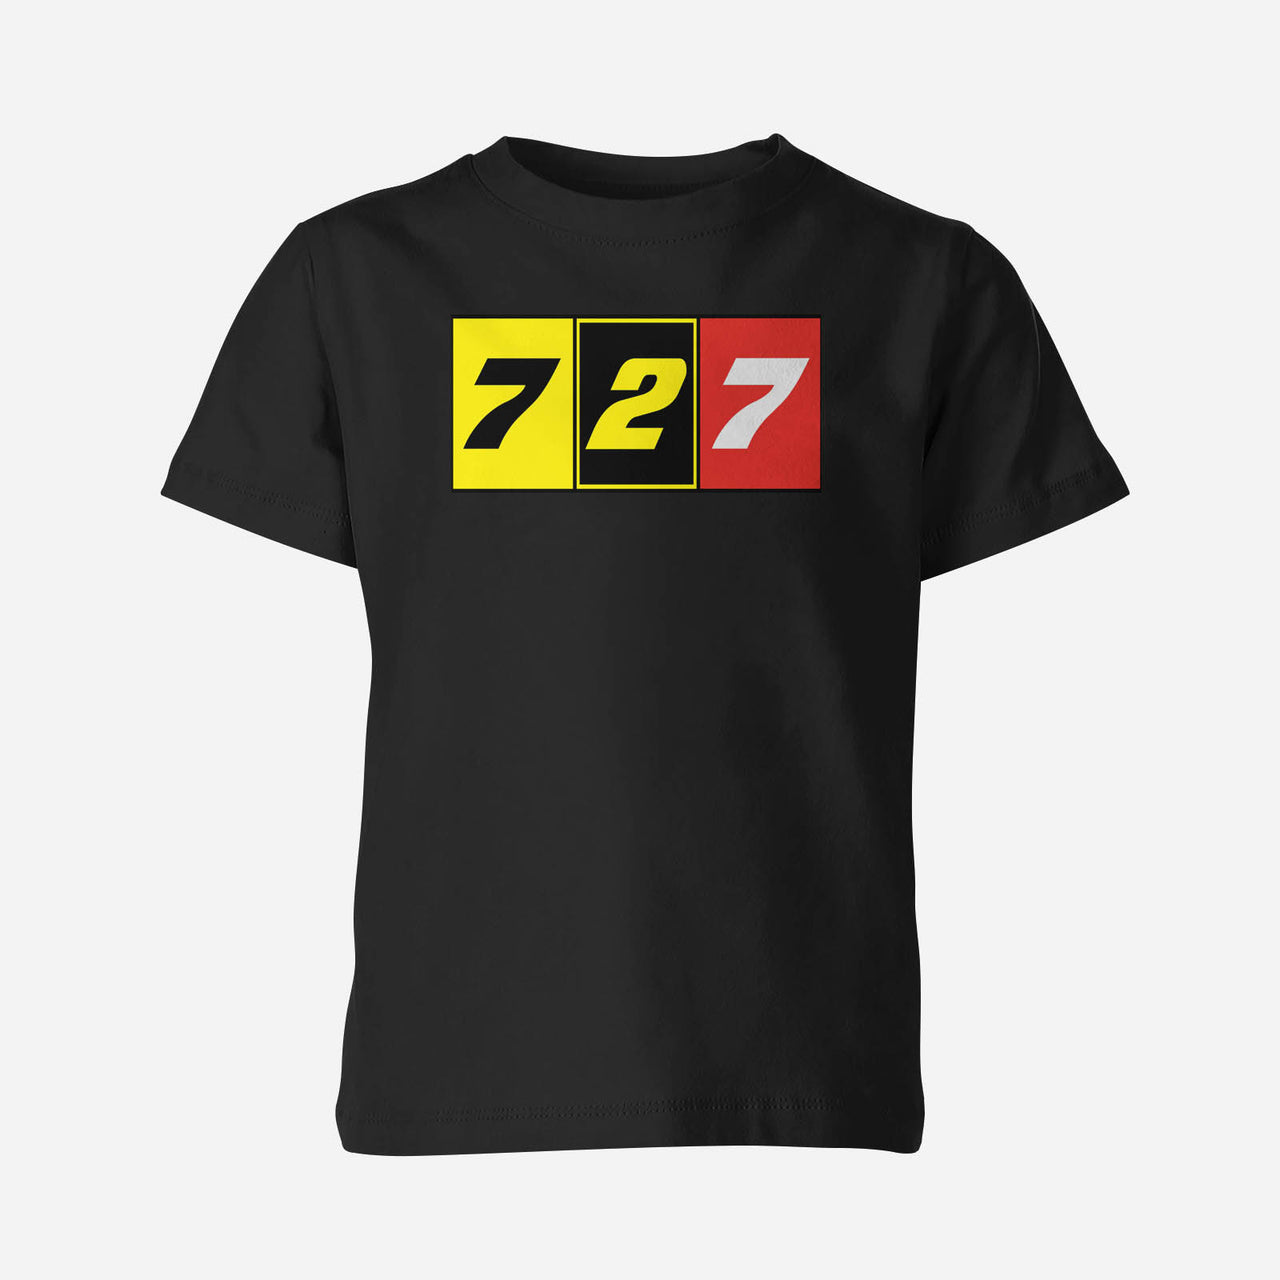 Flat Colourful 727 Designed Children T-Shirts